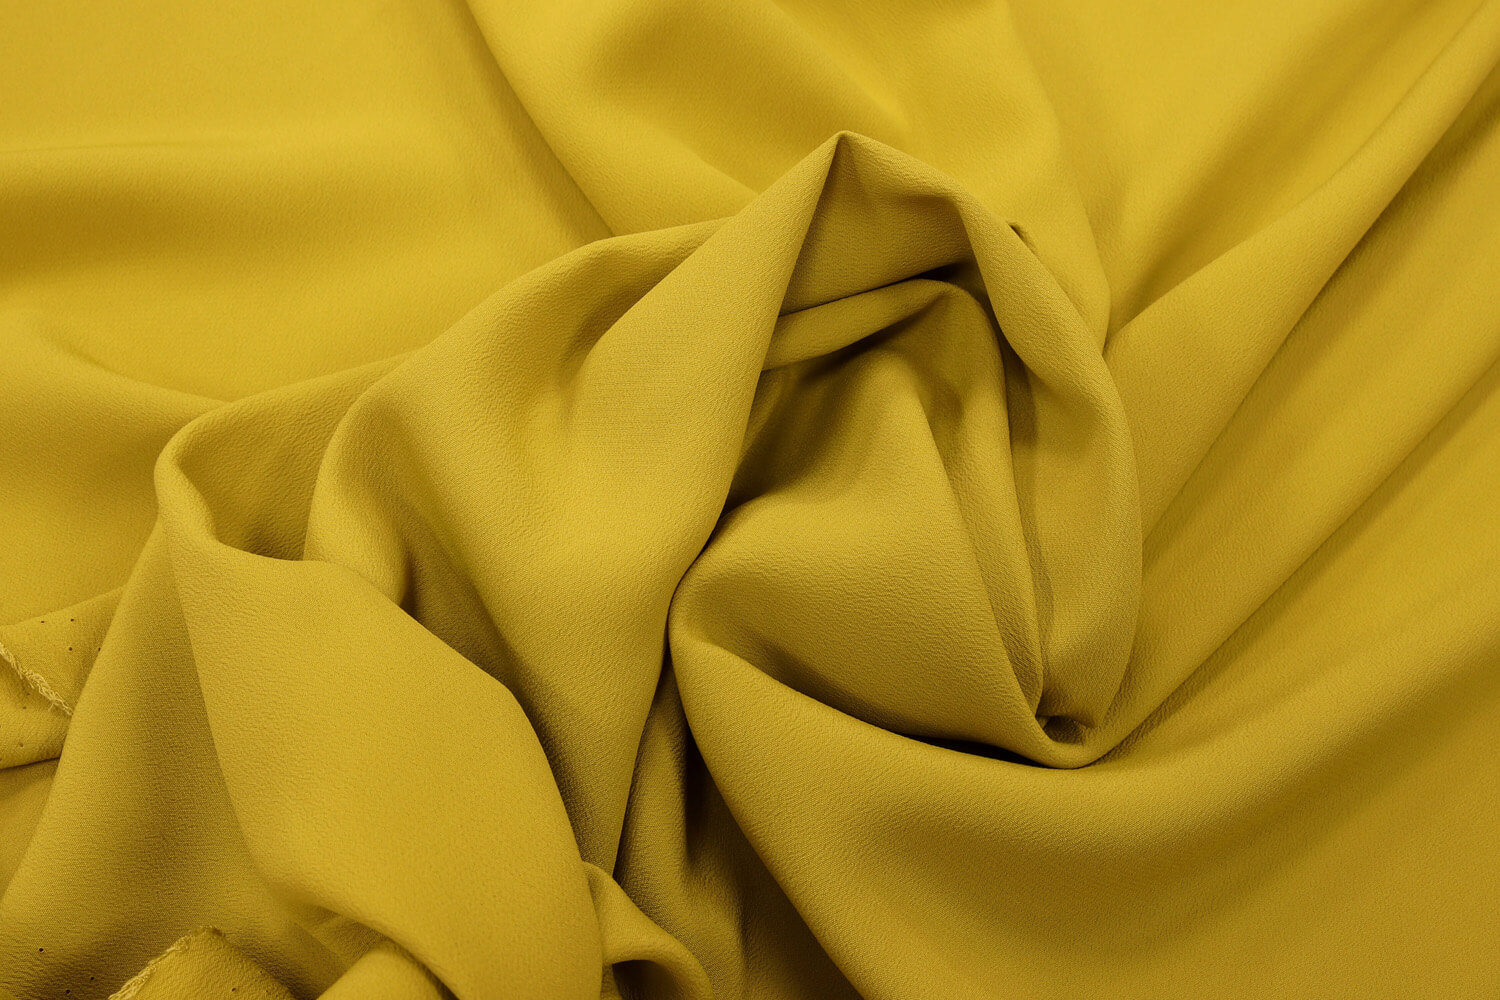 Шелковый крепдешин Max Mara, цвет Желтый, фото 1